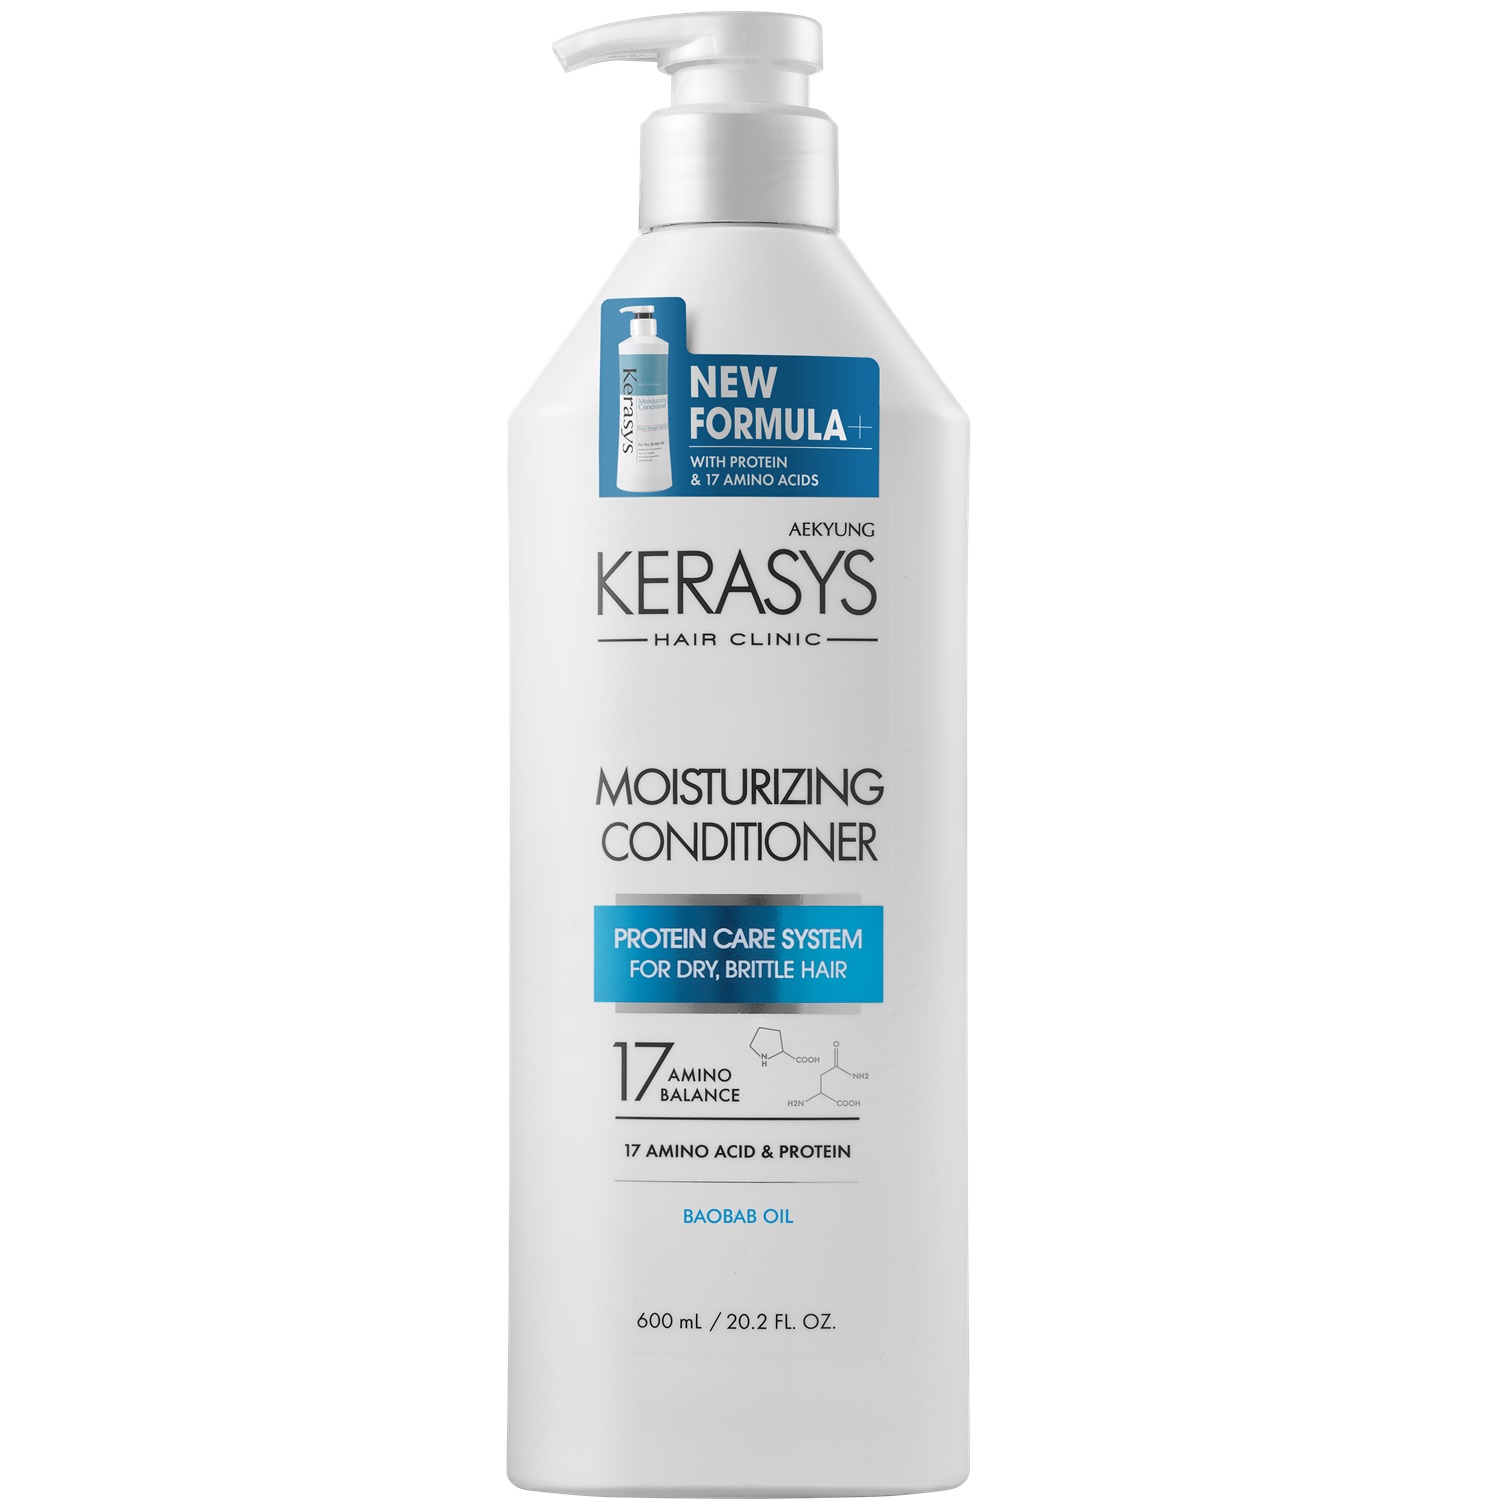 Kerasys Увлажняющий кондиционер для волос, 600 мл (Kerasys, ) kerasys hair clinic moisturizing шампунь увлажняющий для волос 600 мл kerasys